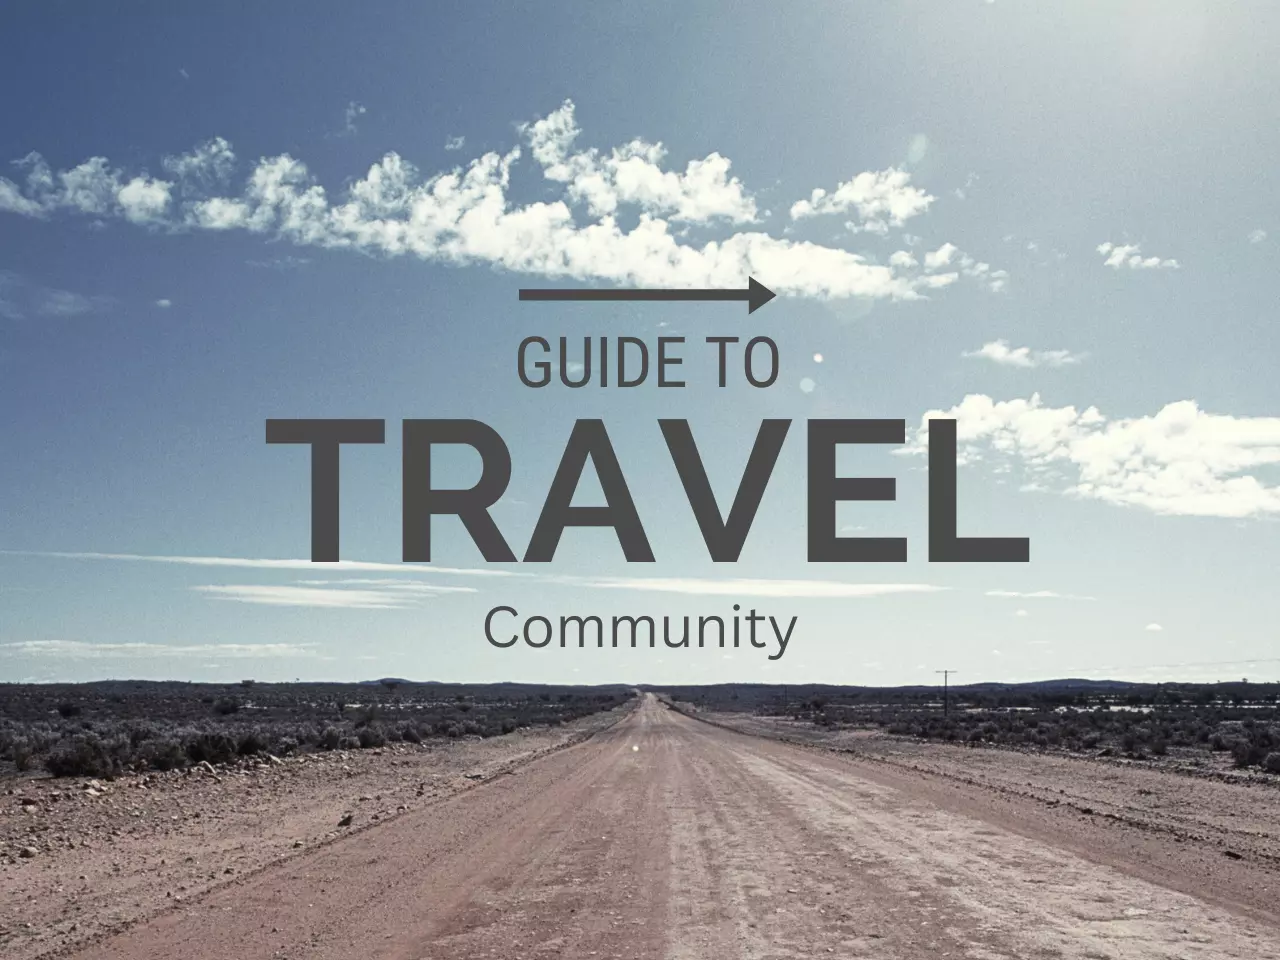 Travel Community Guide